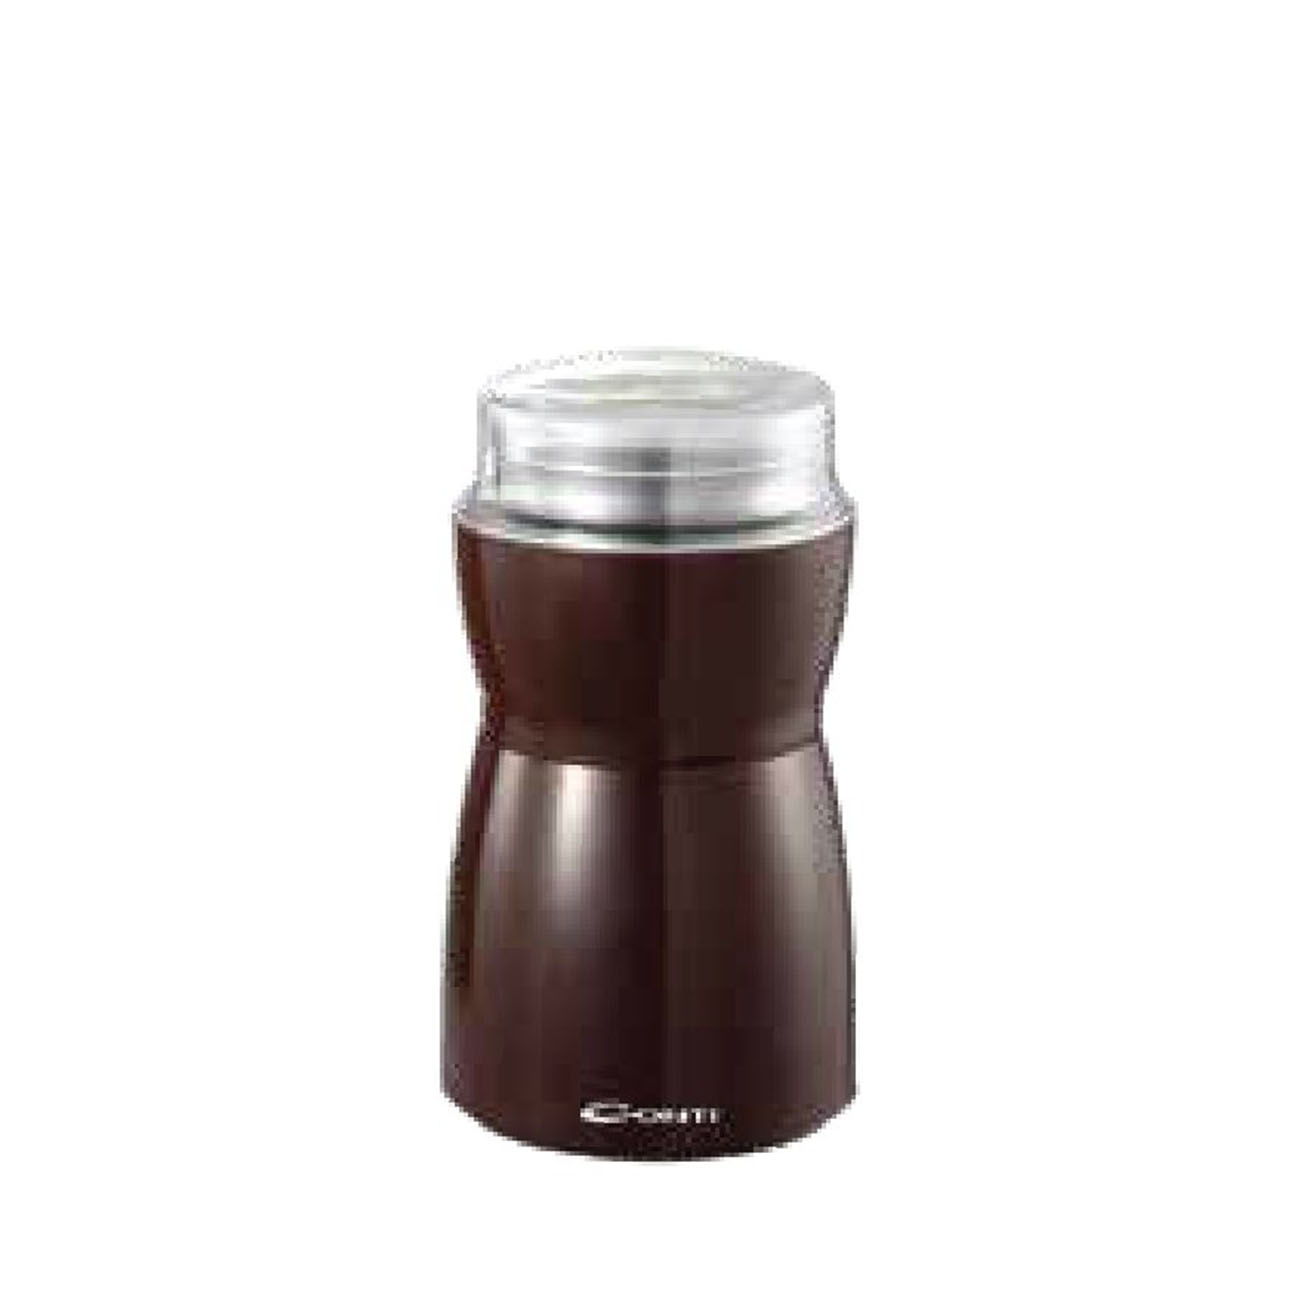 CONTI Coffee Grinder CMW-201 | Coffee maker | Kitchen Appliances | OTHER APPLIANCES